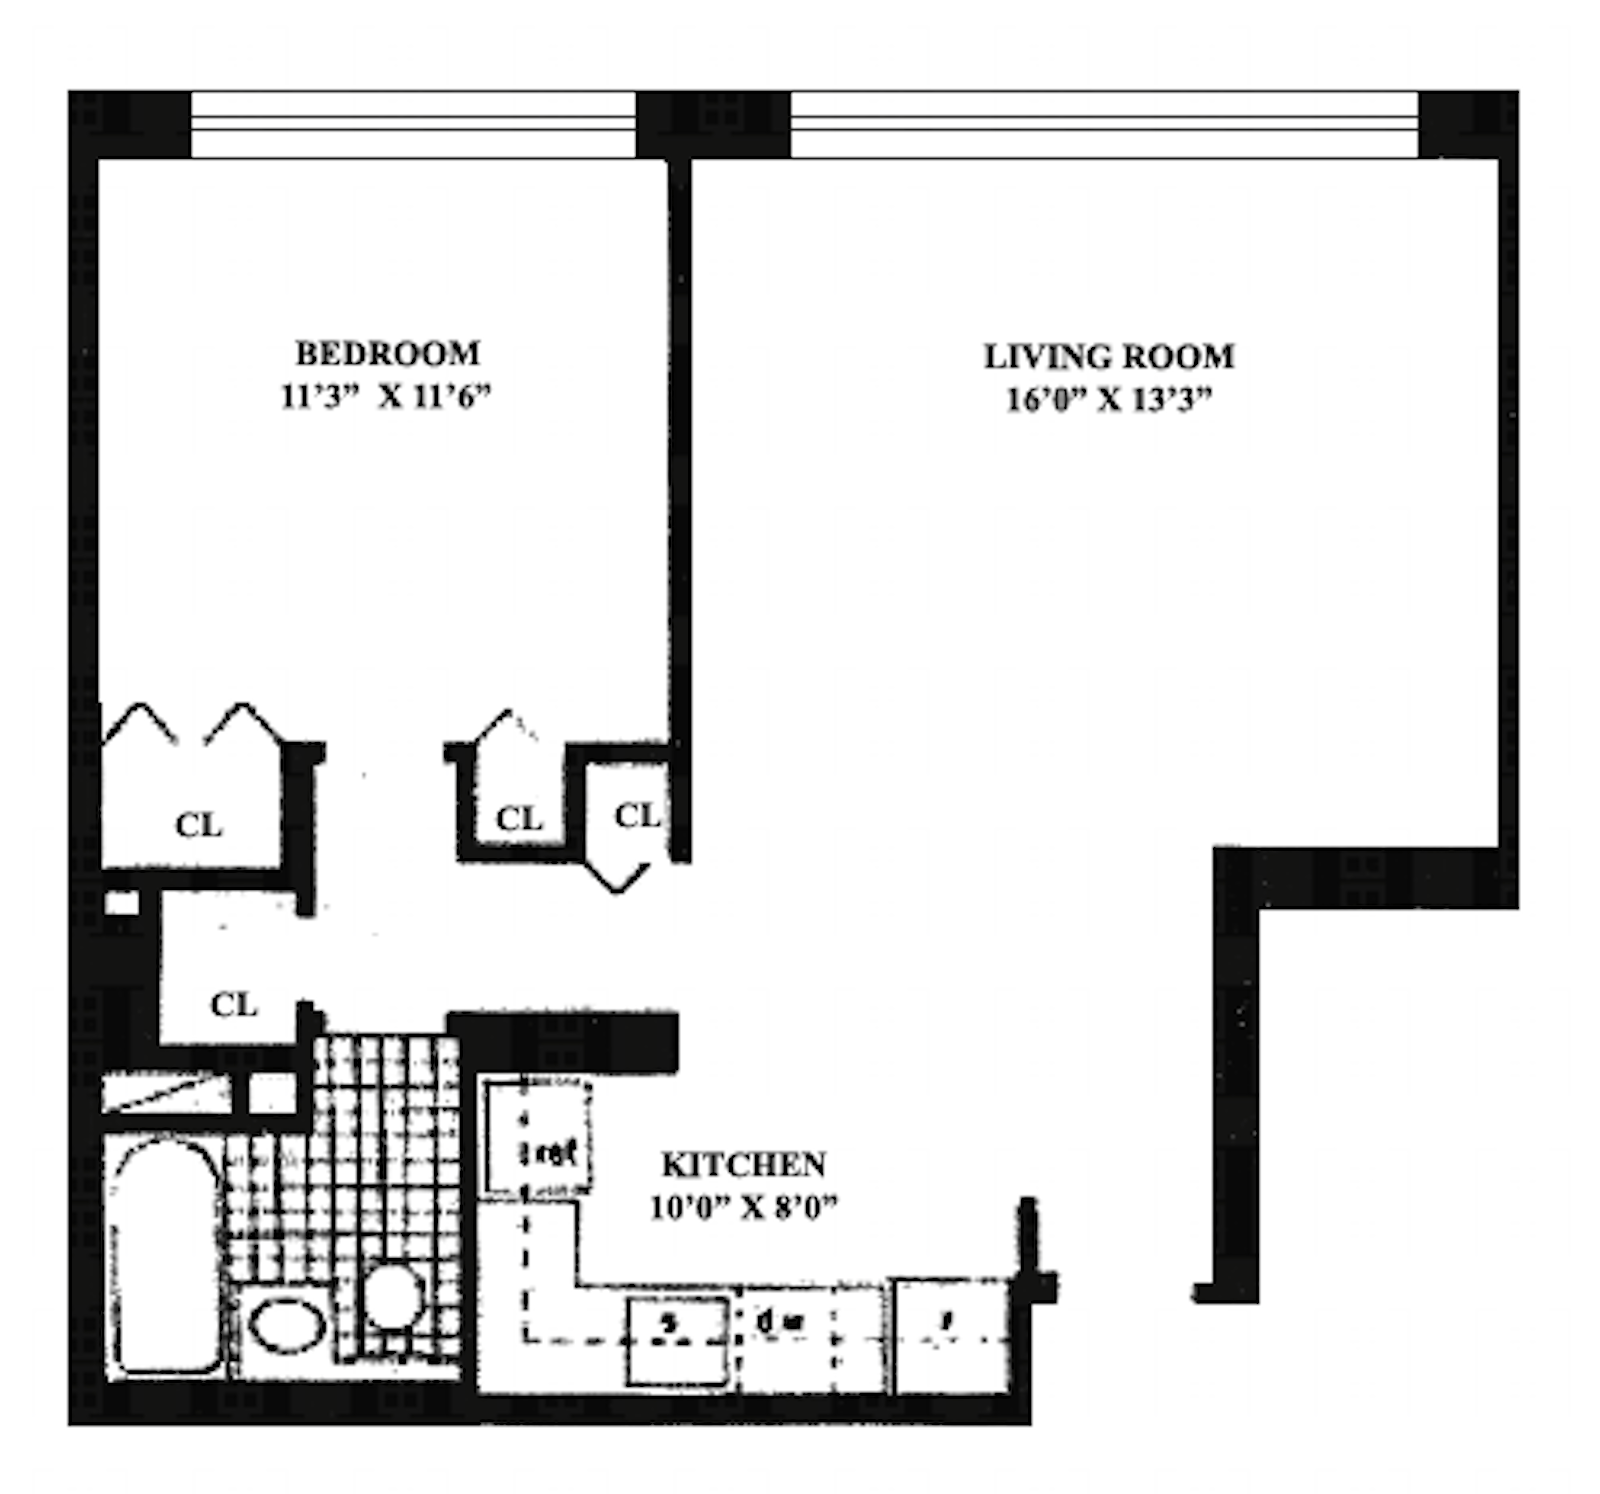 Floorplan for 333 East 45th Street, 8C